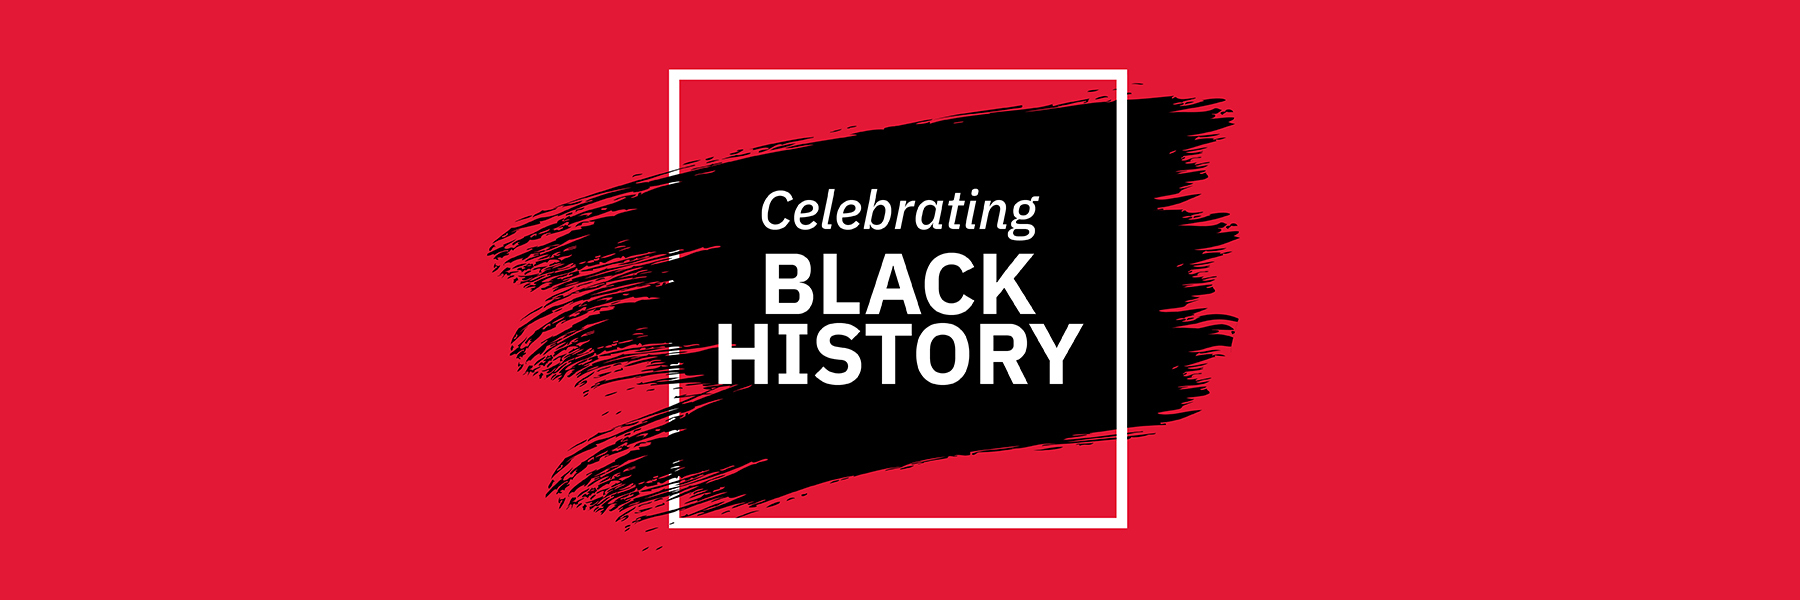 Black History Month at York University